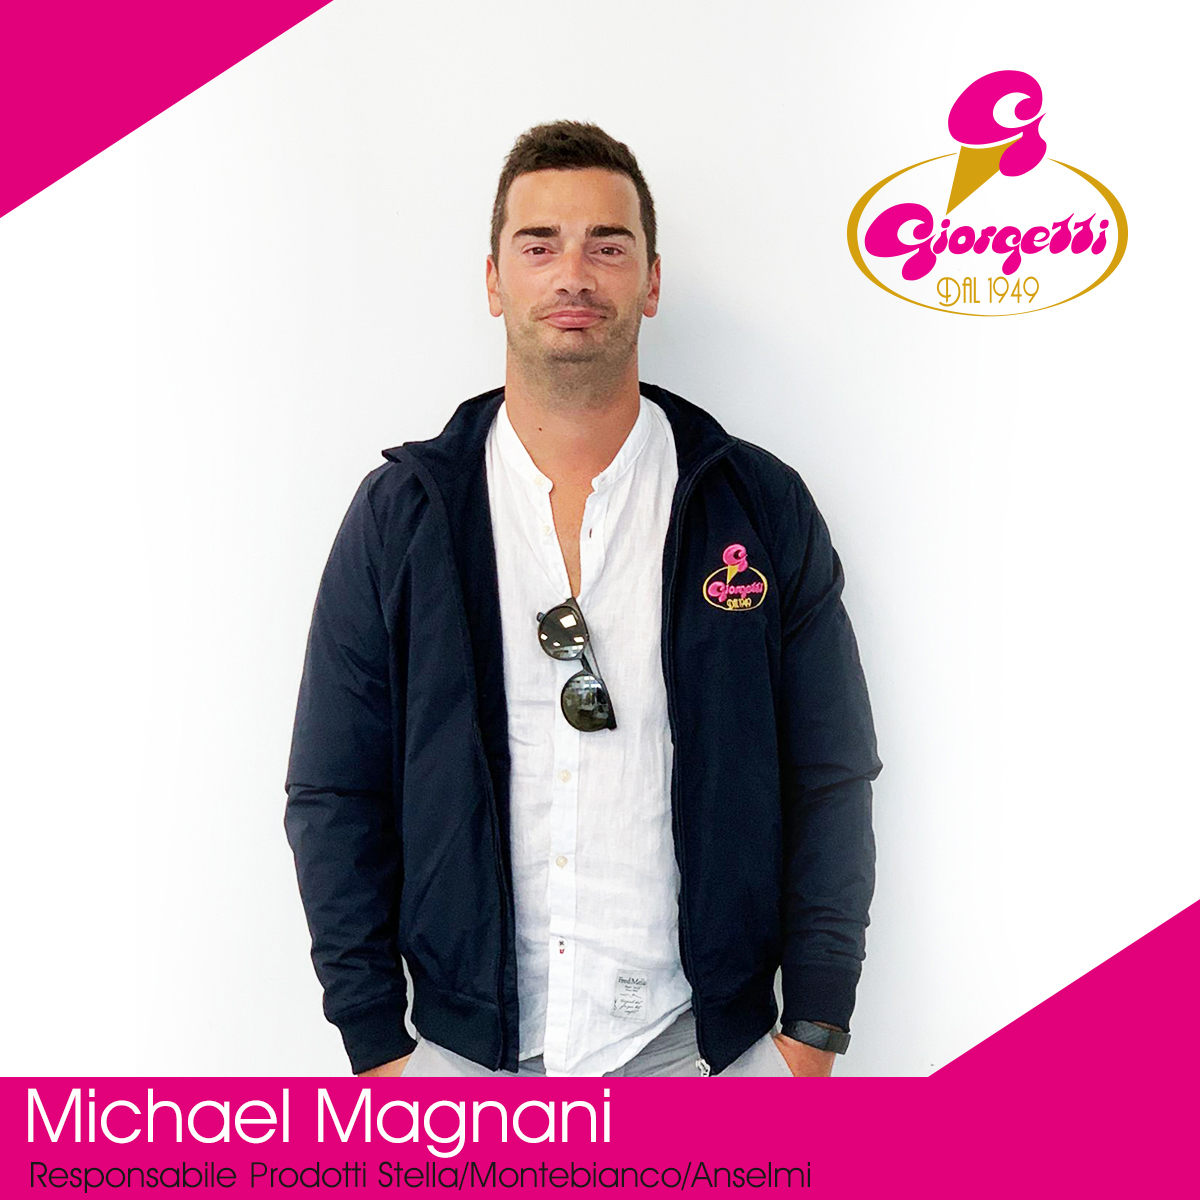 Michael Magnani